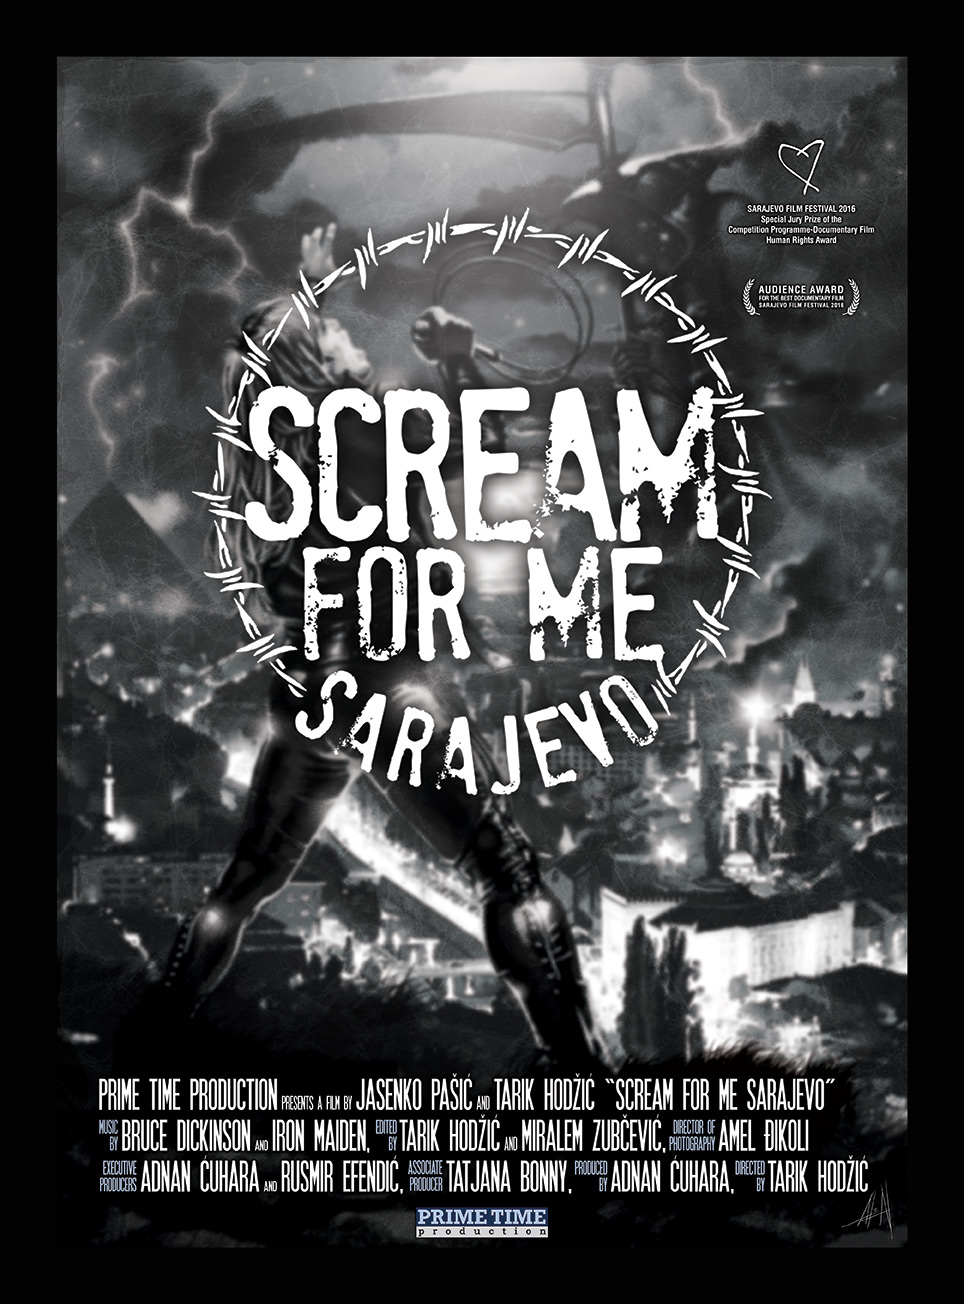 Nonton film Scream for Me Sarajevo layarkaca21 indoxx1 ganool online streaming terbaru